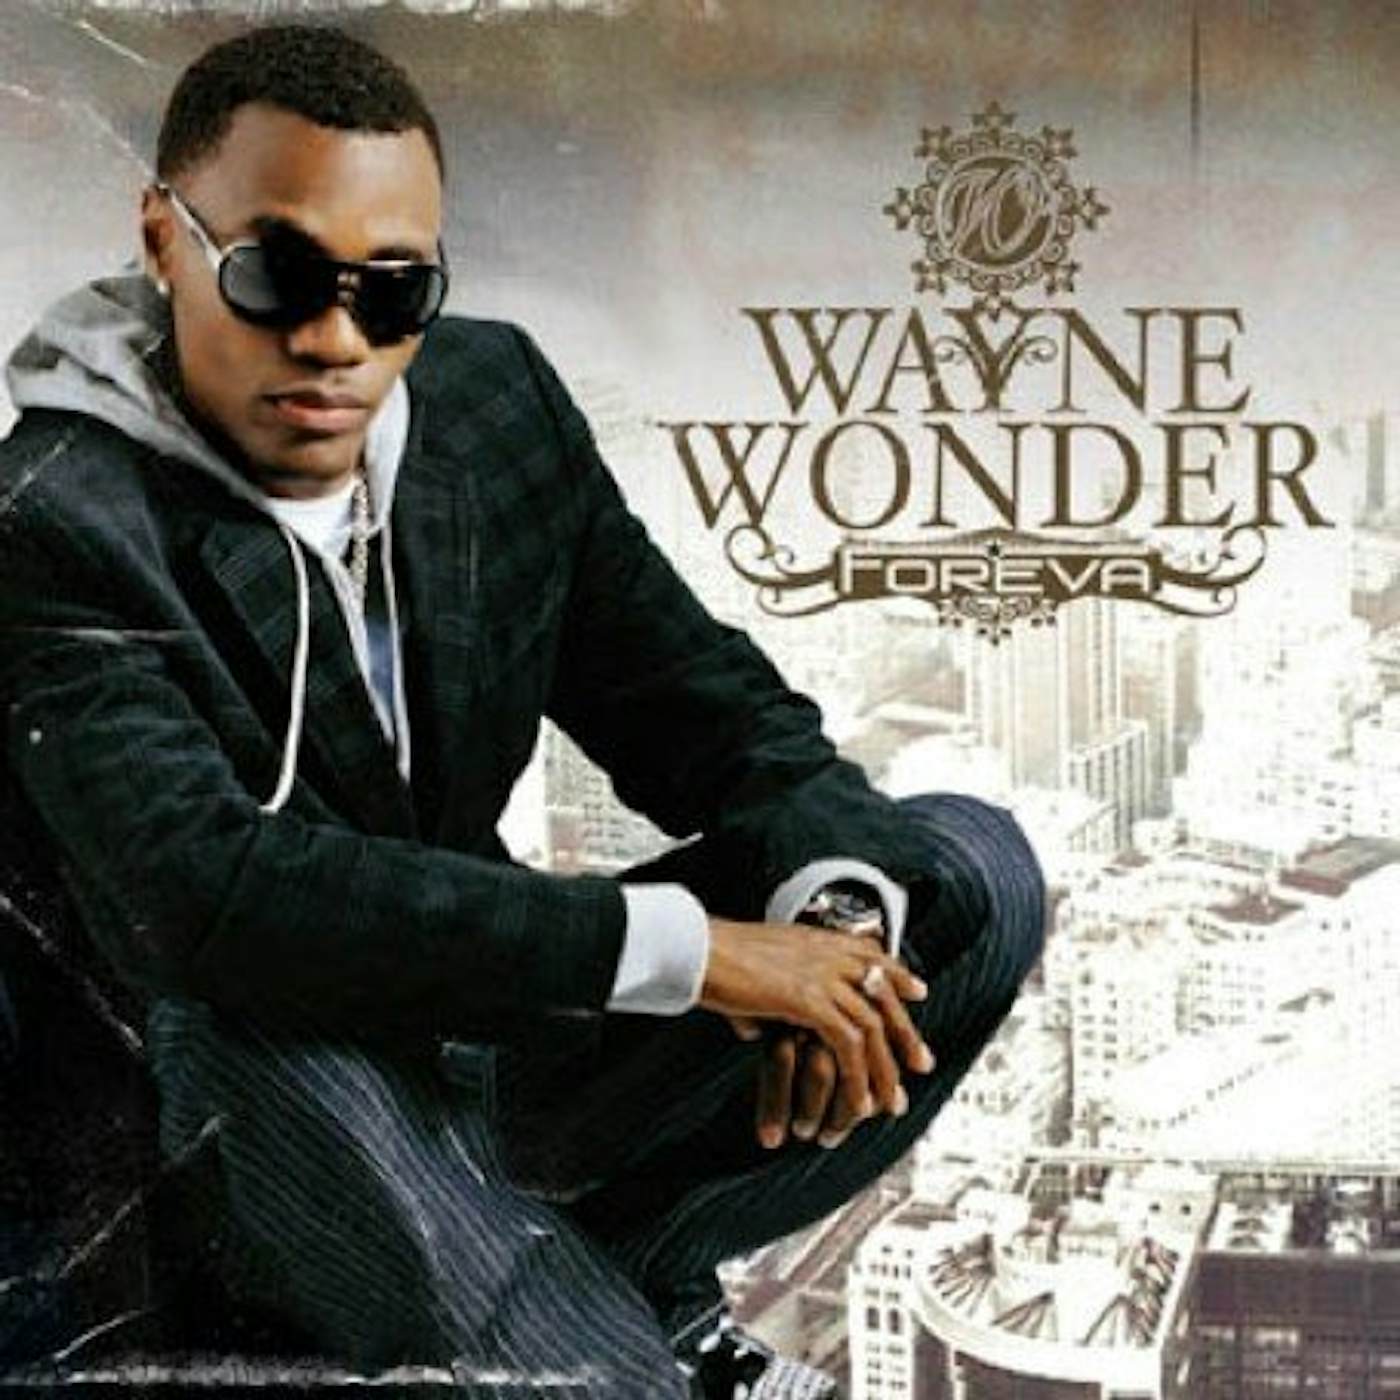 Wayne Wonder Foreva Vinyl Record